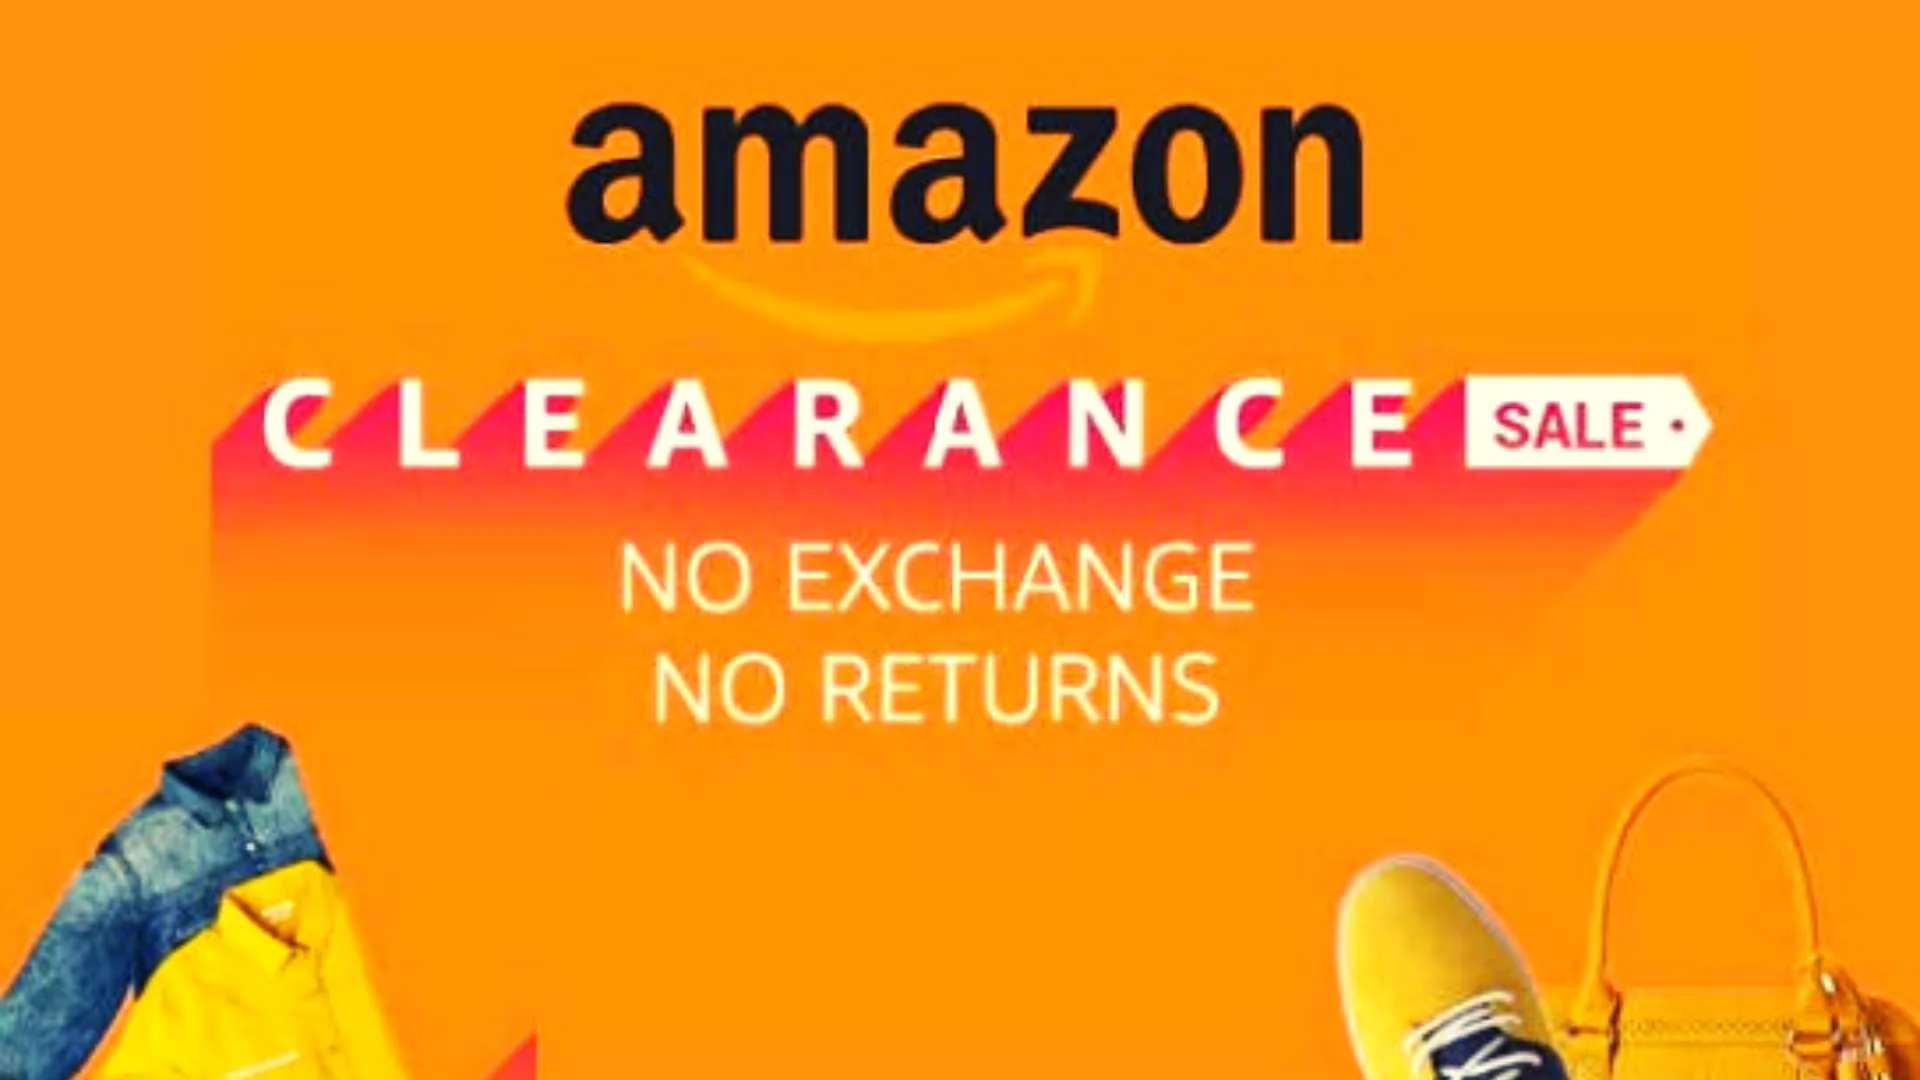 Amazon Clearance Sale